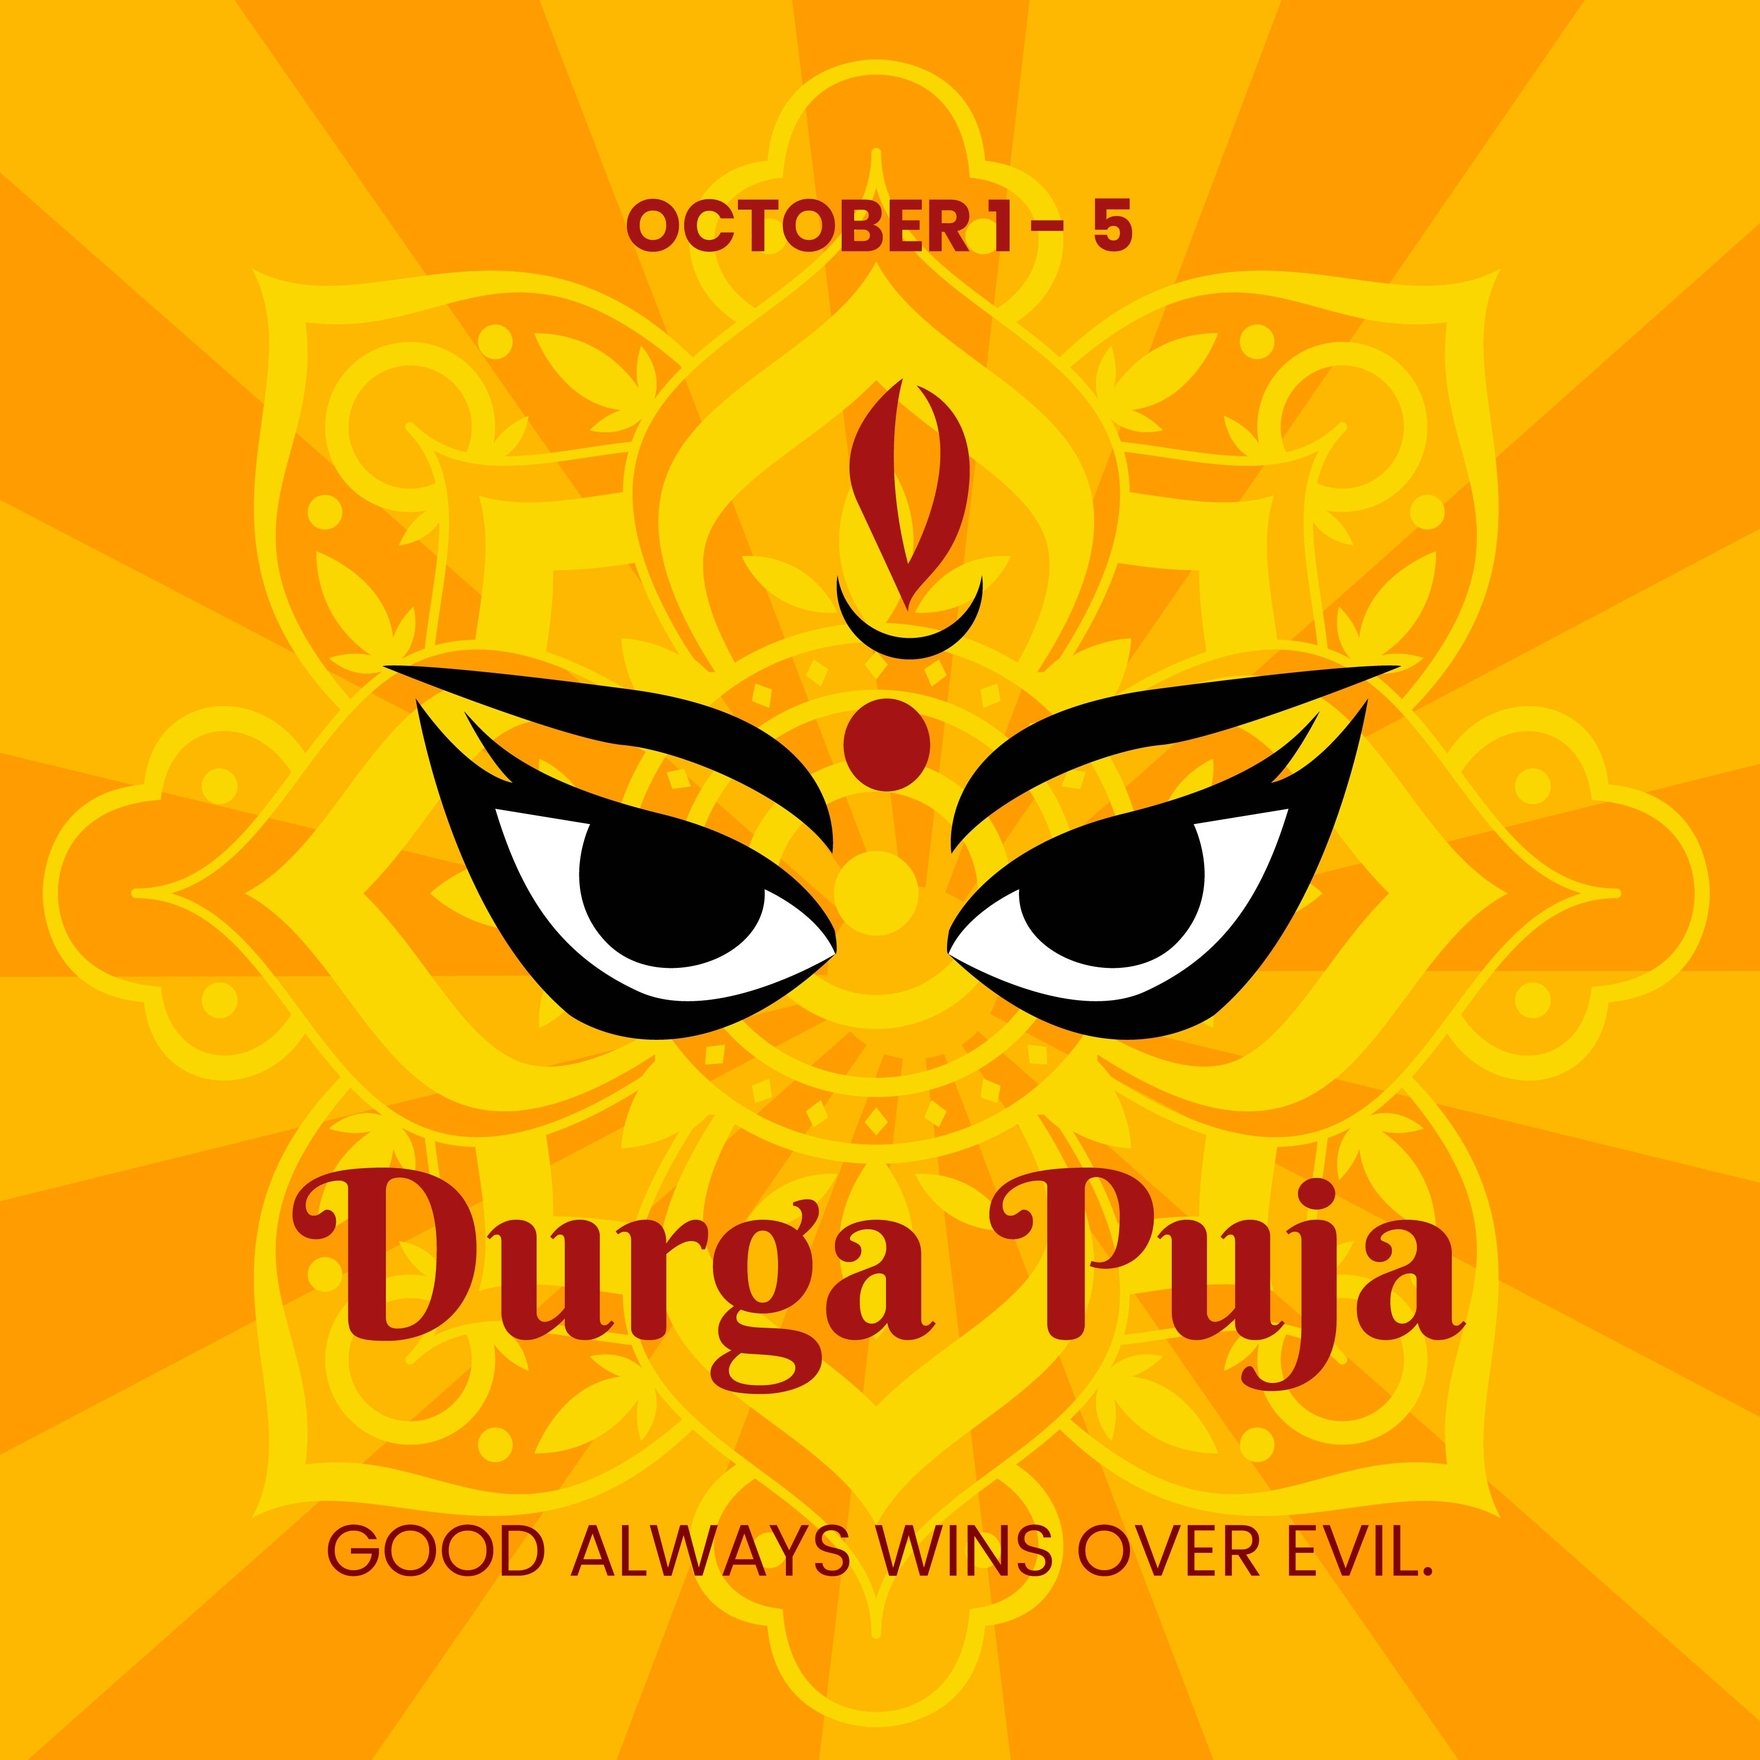 Free Durga Puja Instagram Post in Illustrator, PSD, EPS, SVG, JPG, PNG